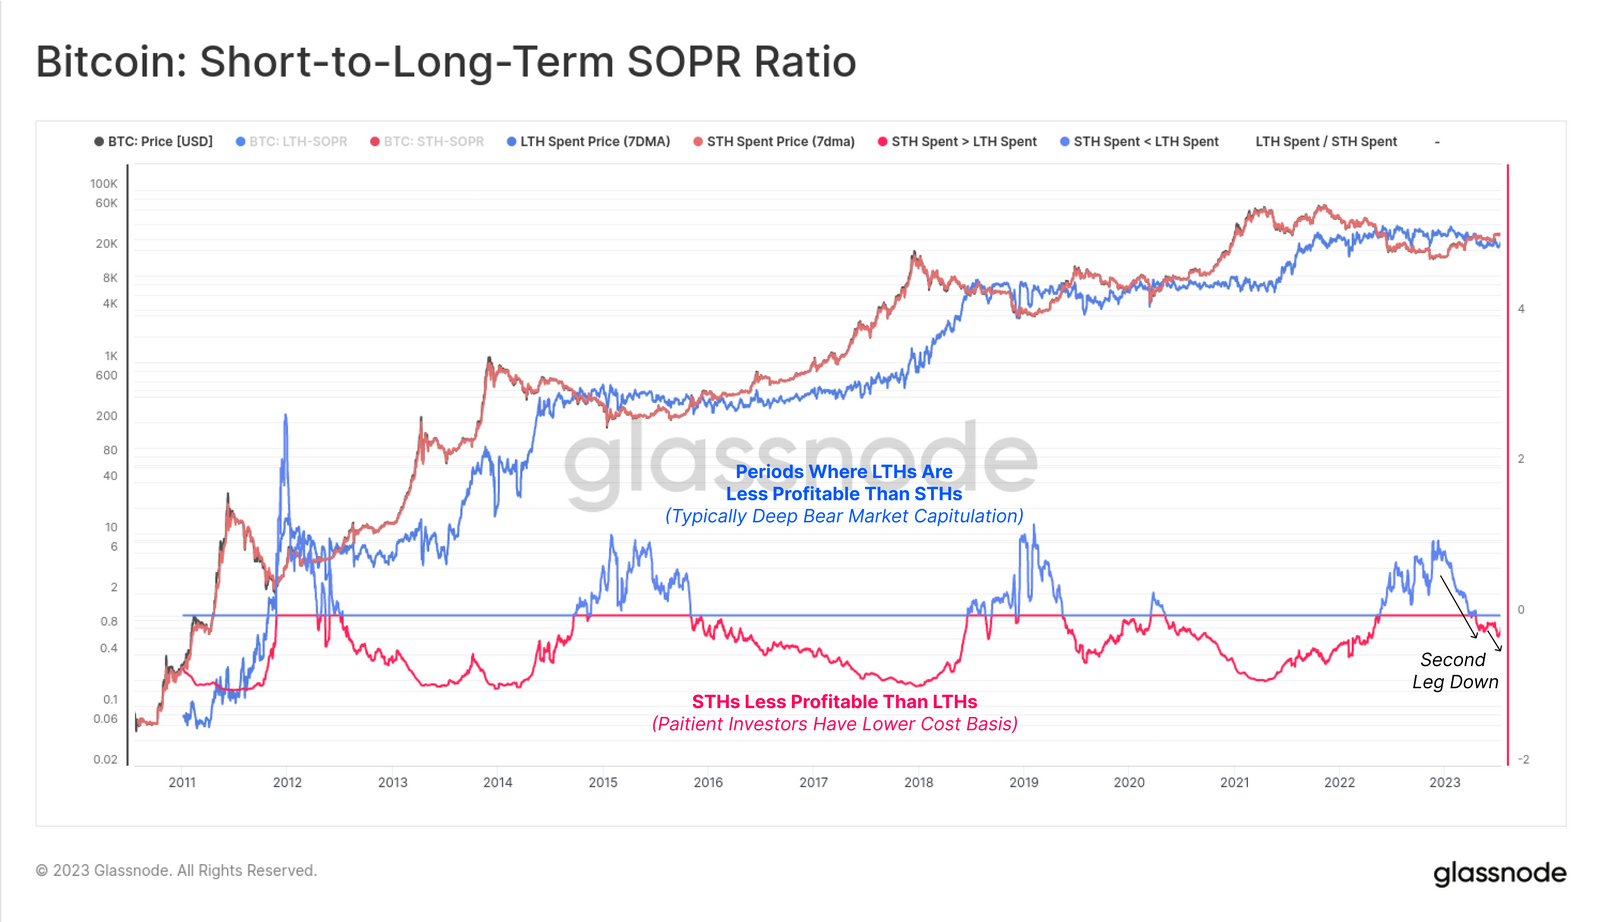 BTC short-to-long-term SOPR. Source: Glassnode